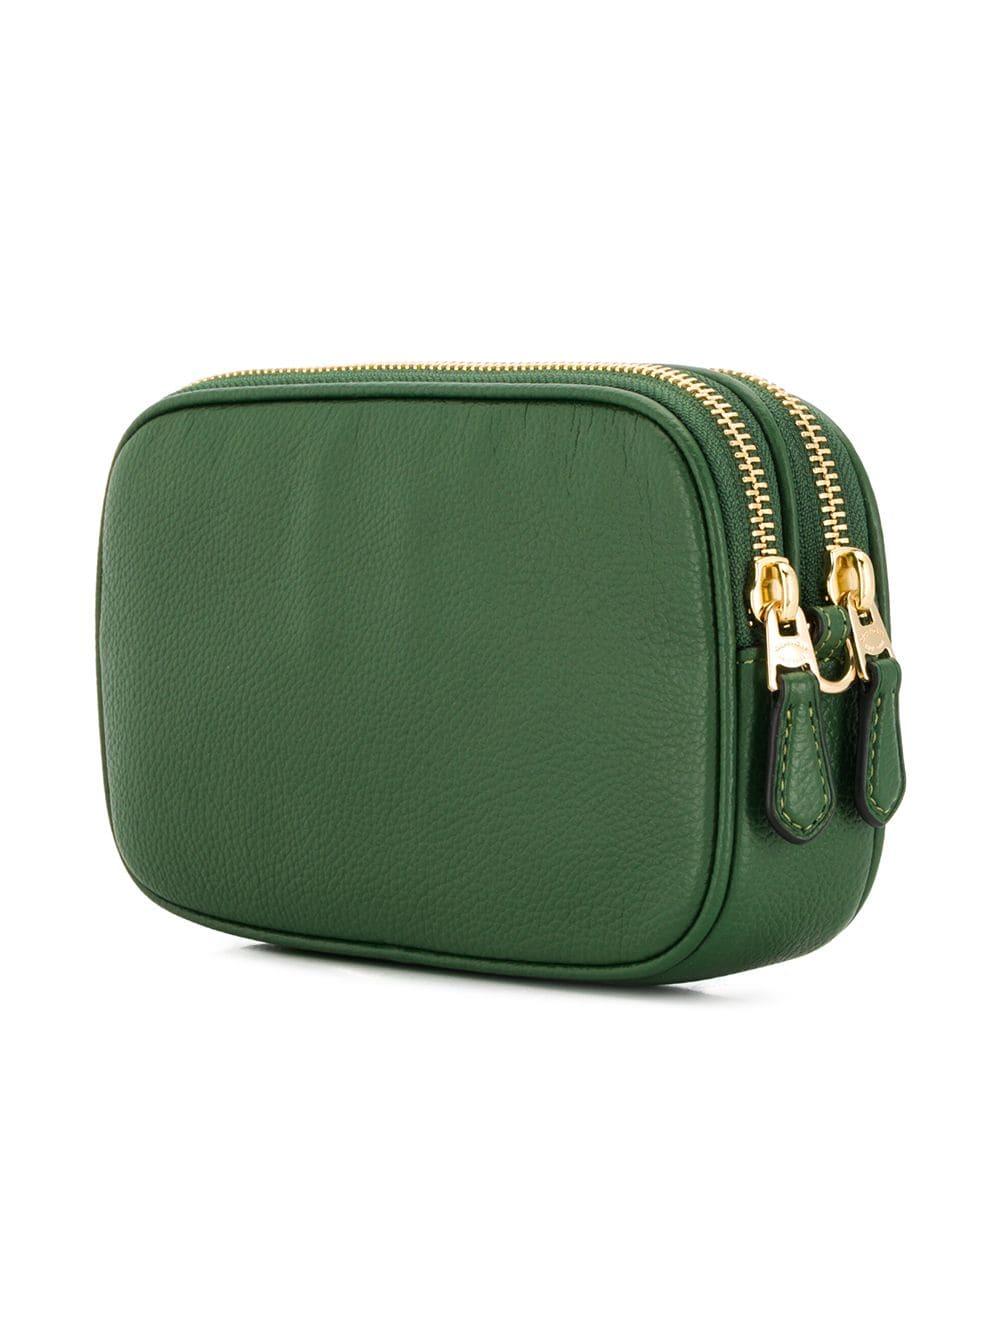 COACH Leather Sadie Crossbody Bag in Green - Lyst